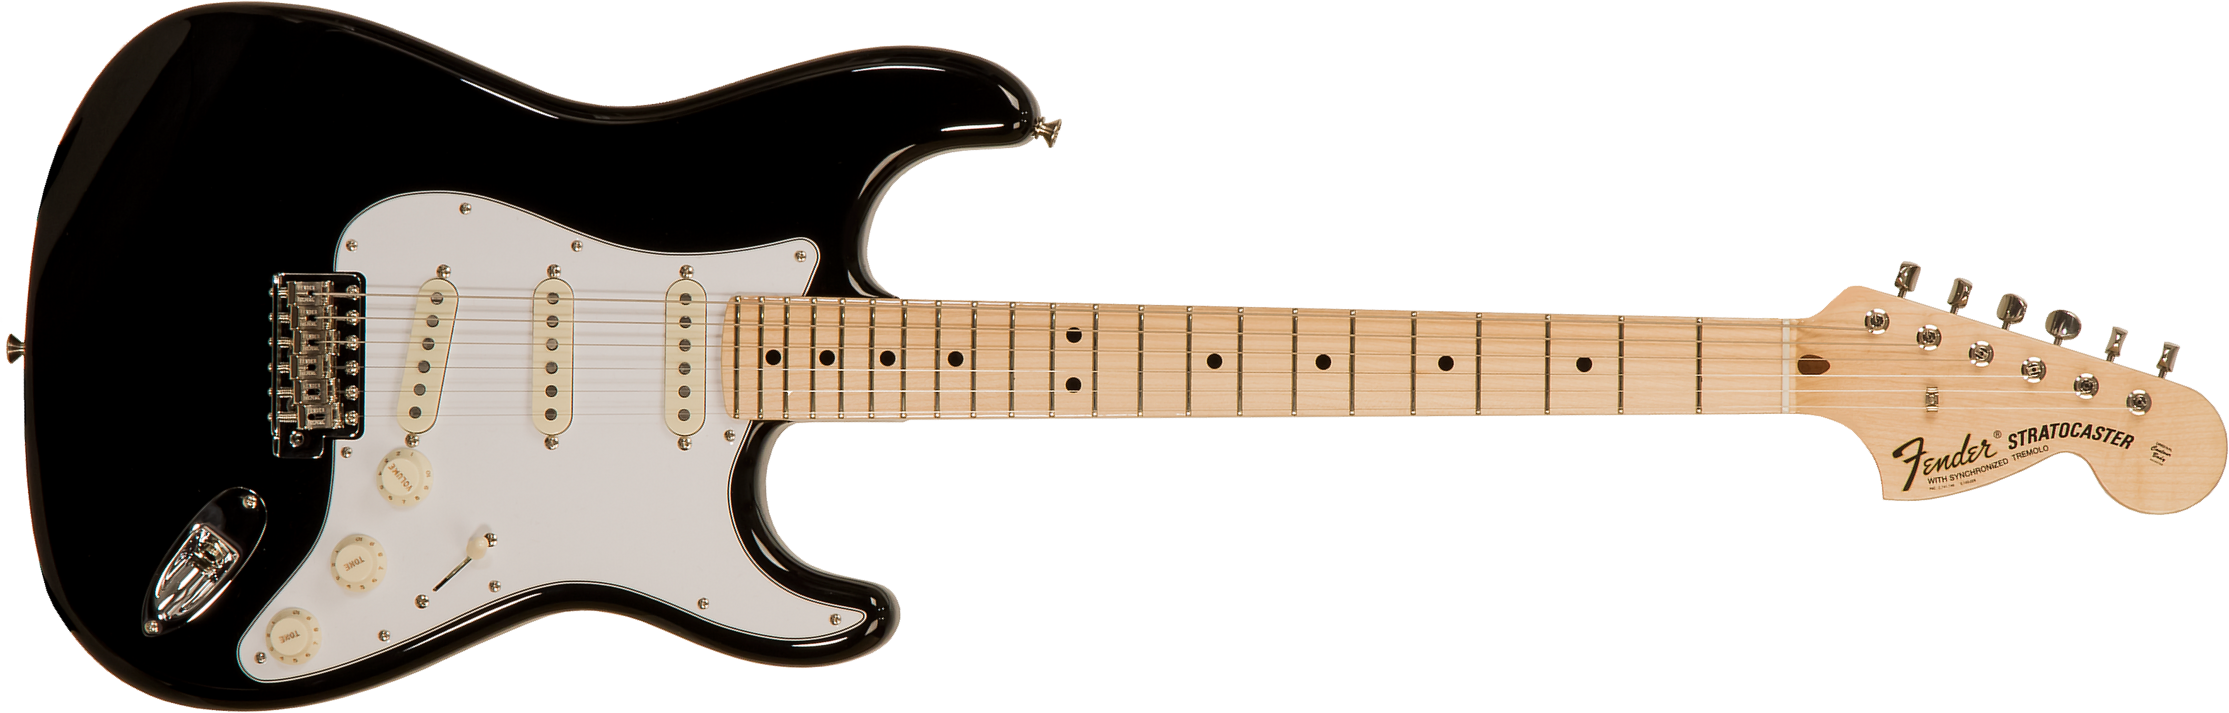 Fender Custom Shop Strat 1969 3s Trem Mn #r123423 - Nos Black - Str shape electric guitar - Main picture